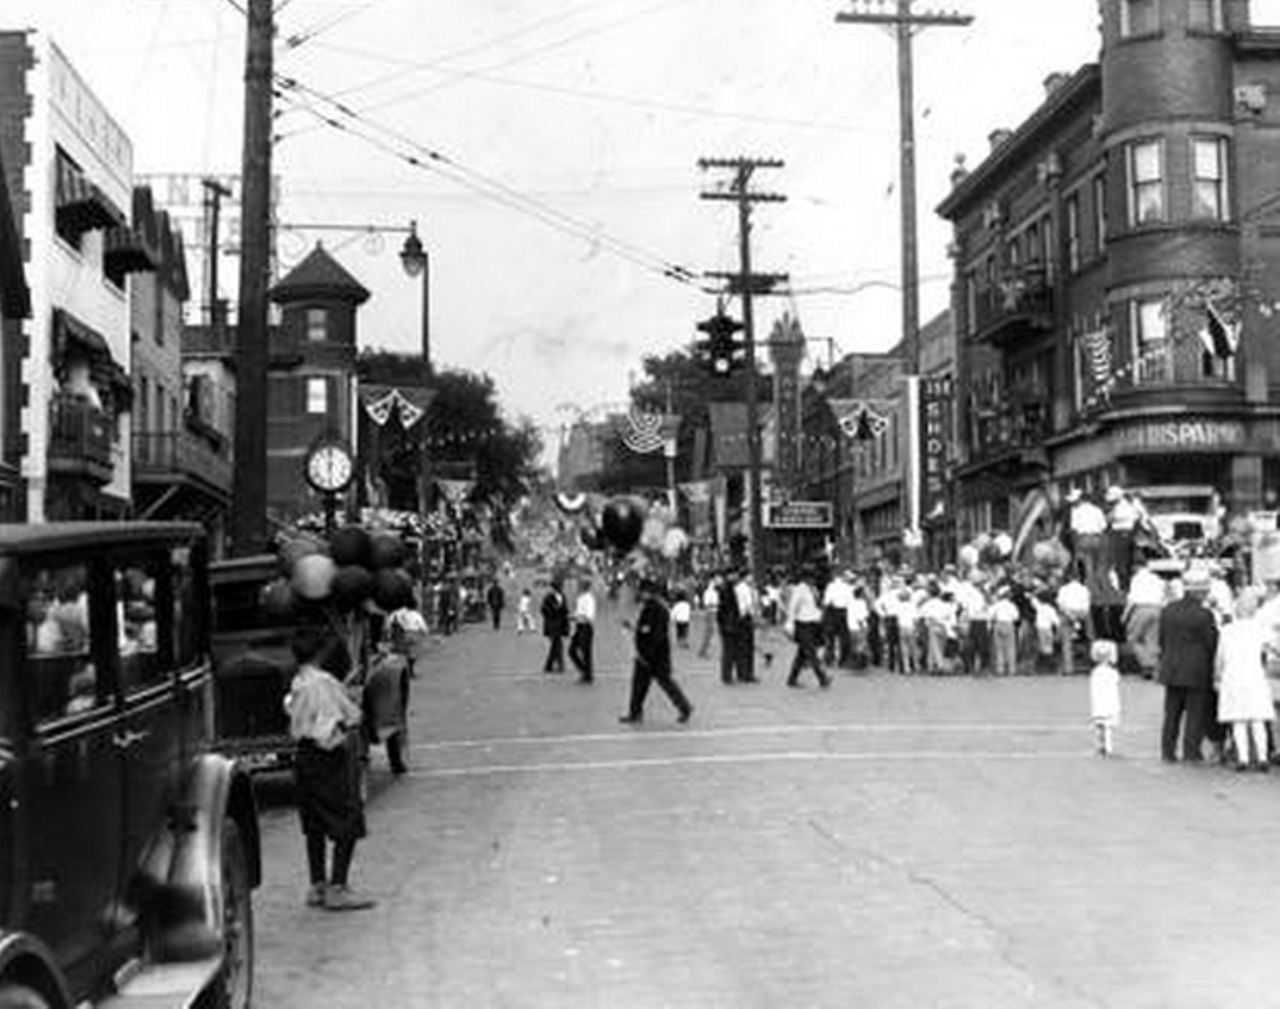 Festival along Mayfield, 1928.